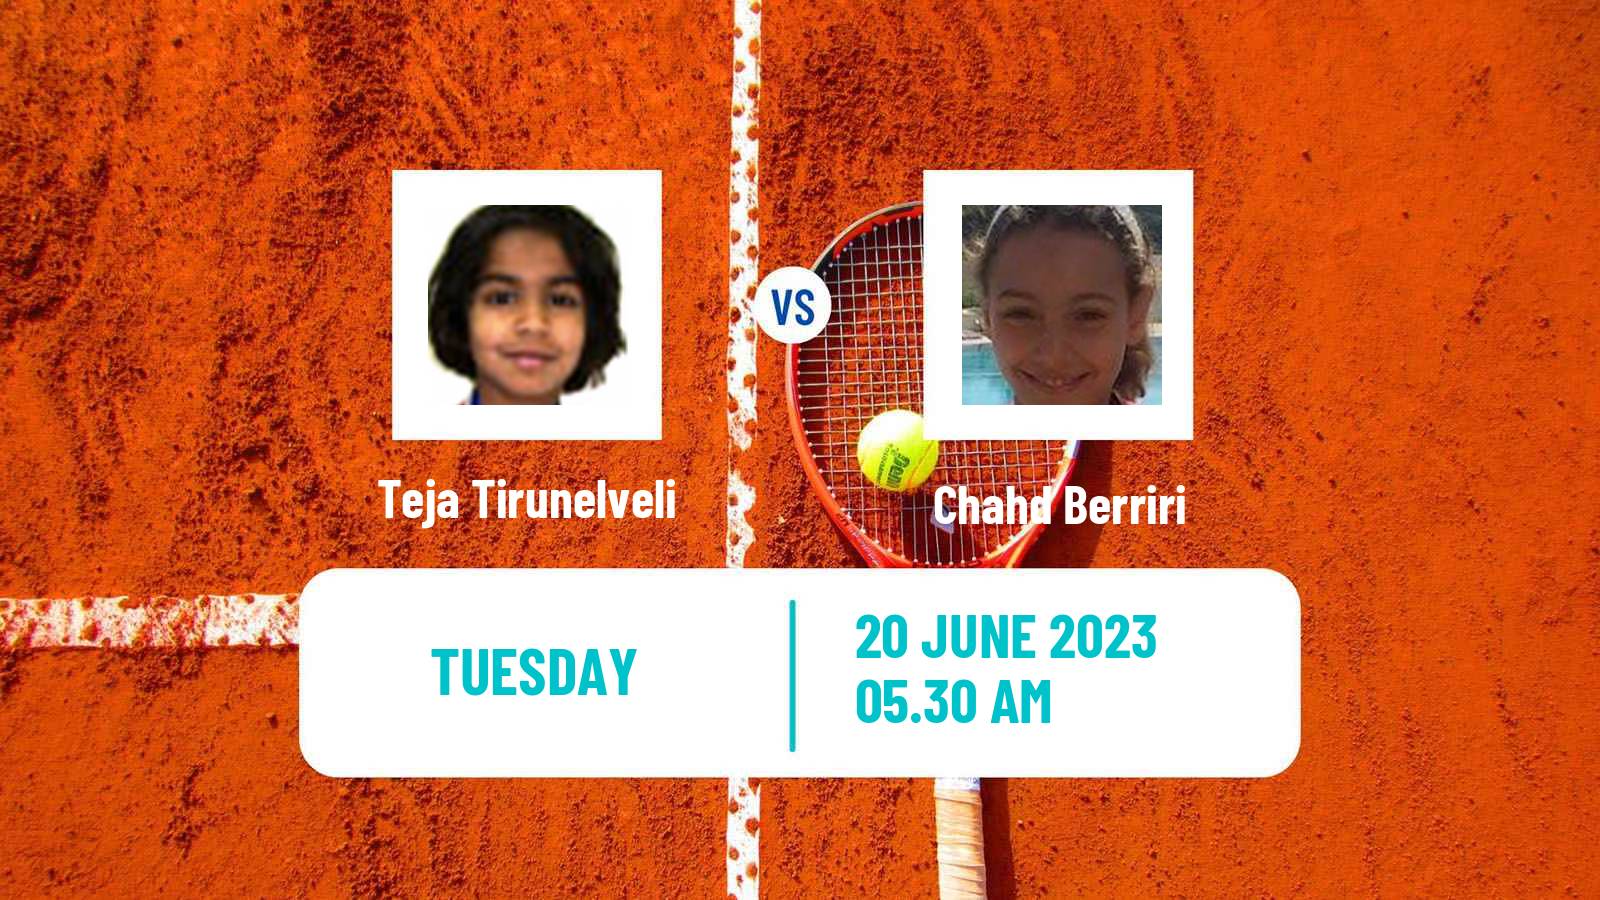 Tennis ITF W15 Monastir 20 Women Teja Tirunelveli - Chahd Berriri